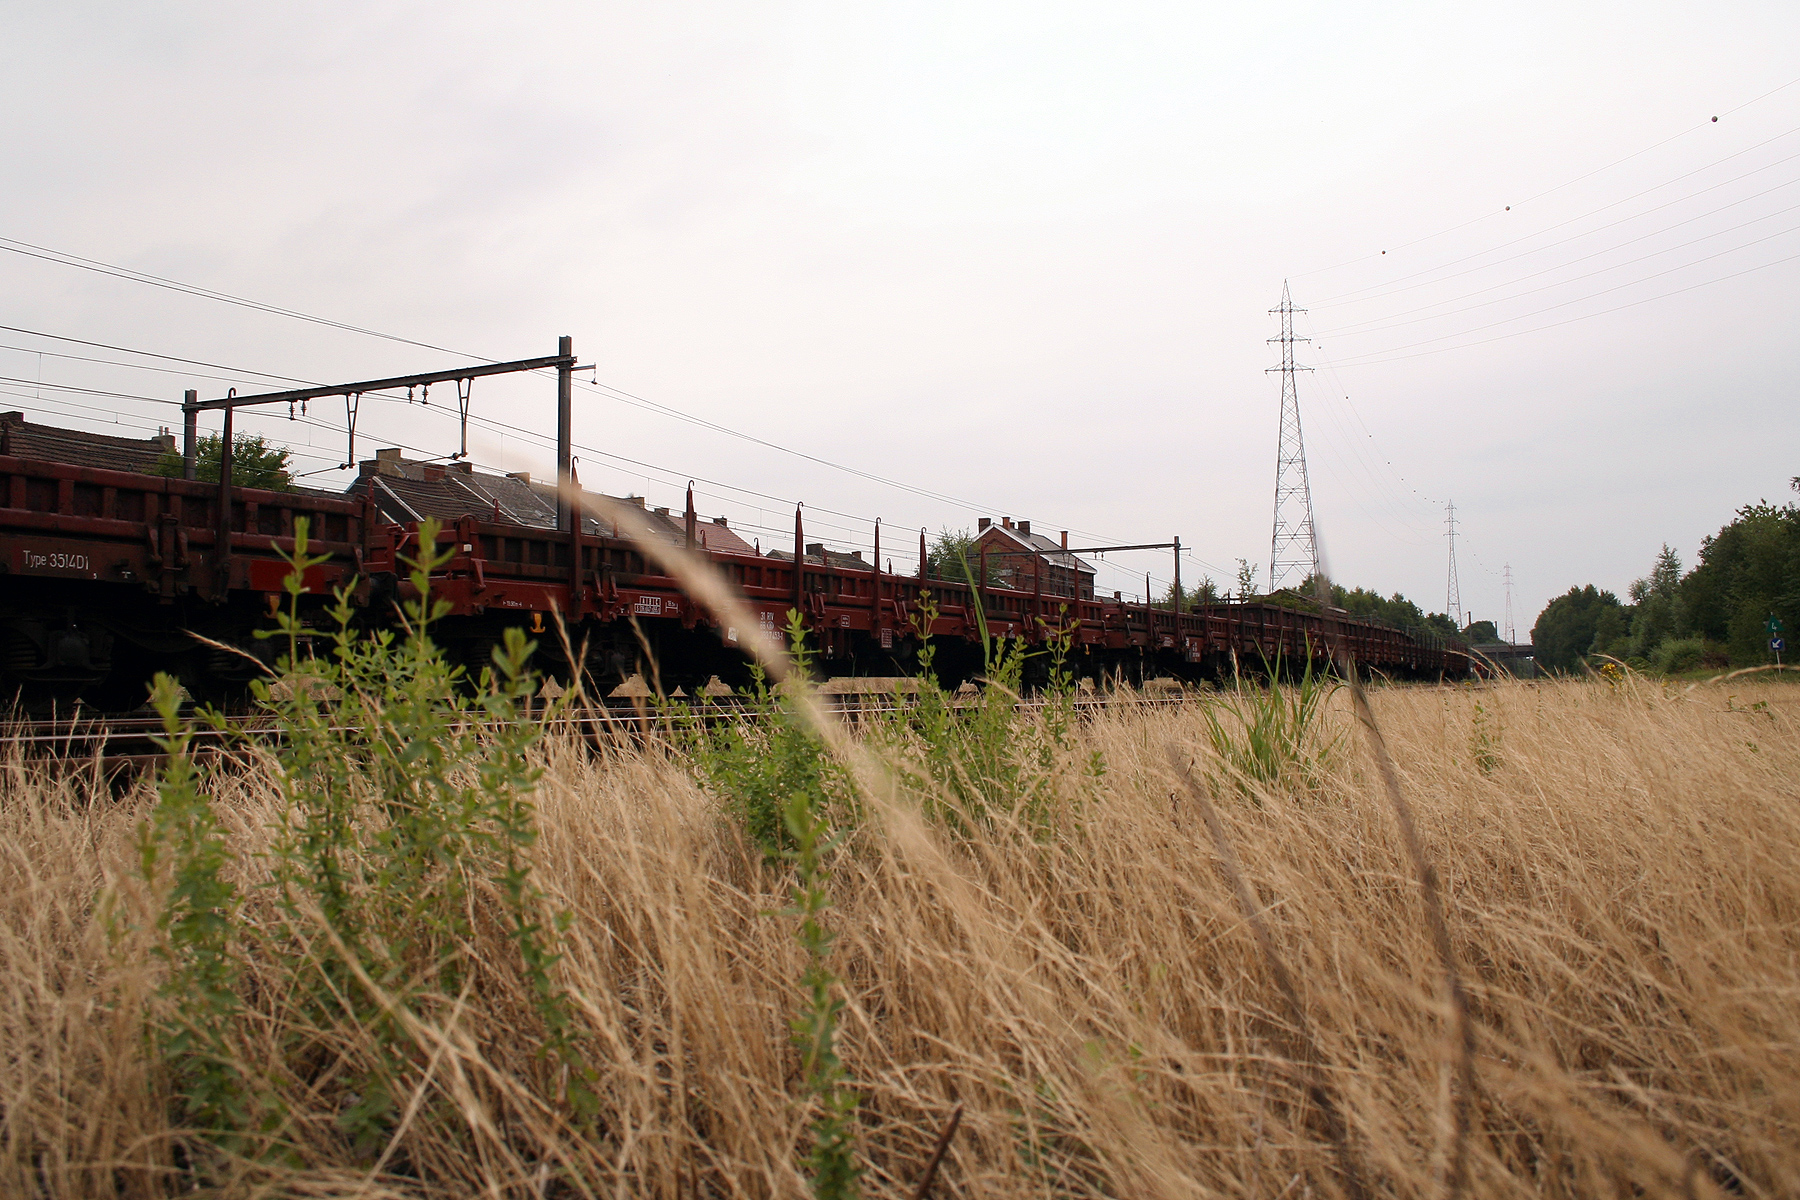 Train, still on it's track photo